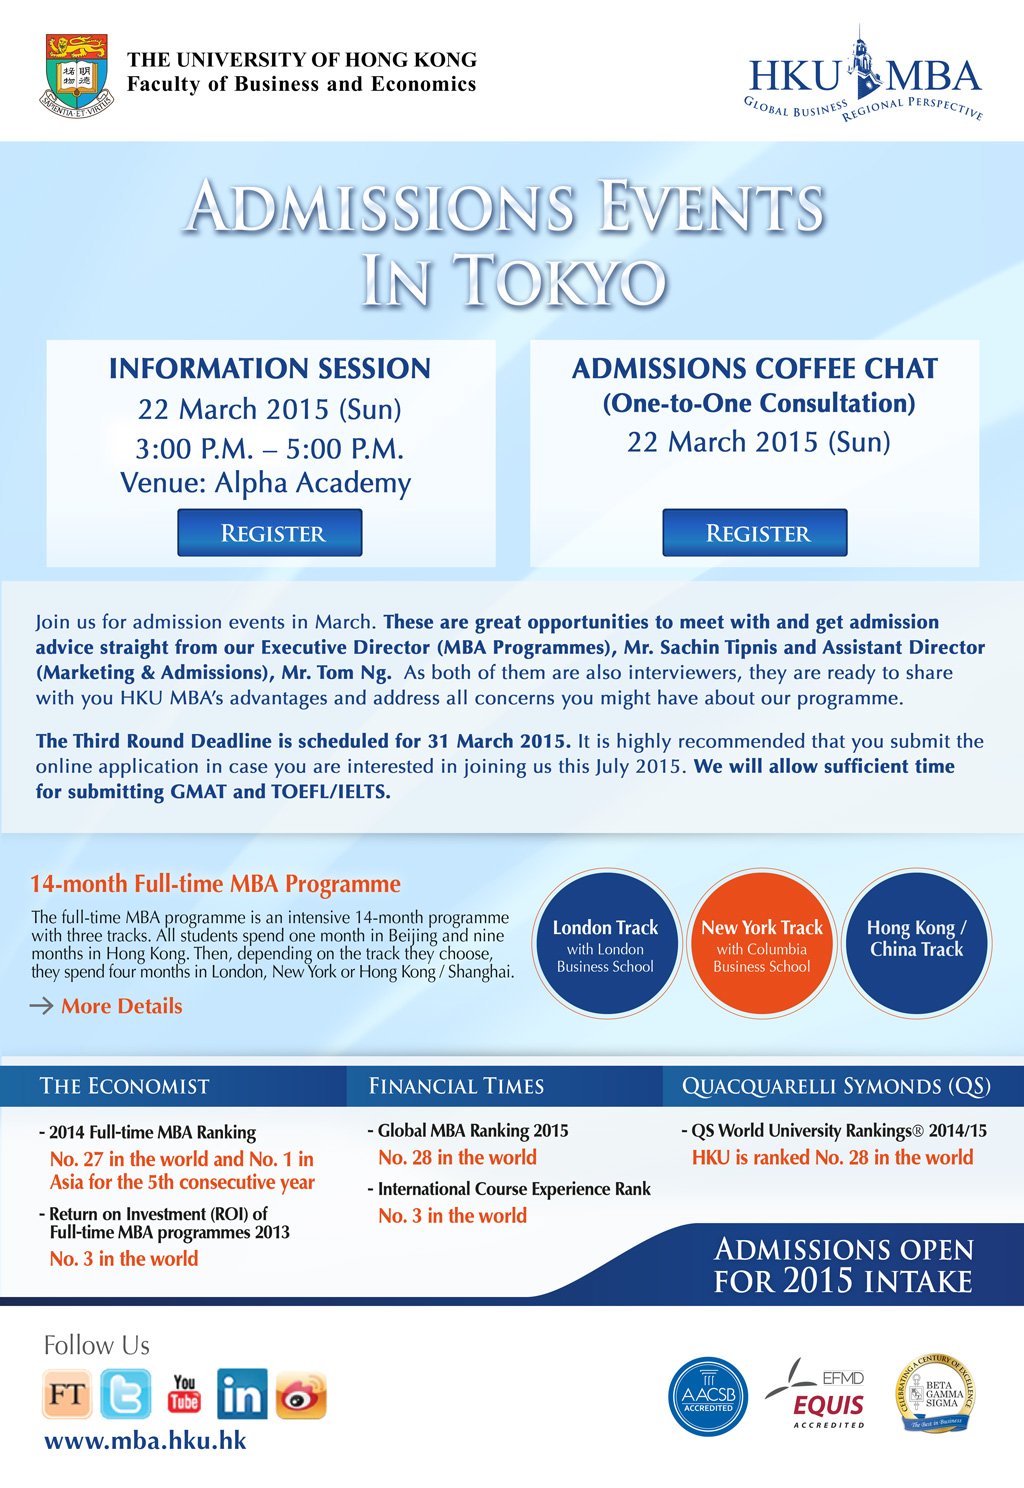 HKU15_004_admission_tokyo_March2015_eDM_aw05.jpg